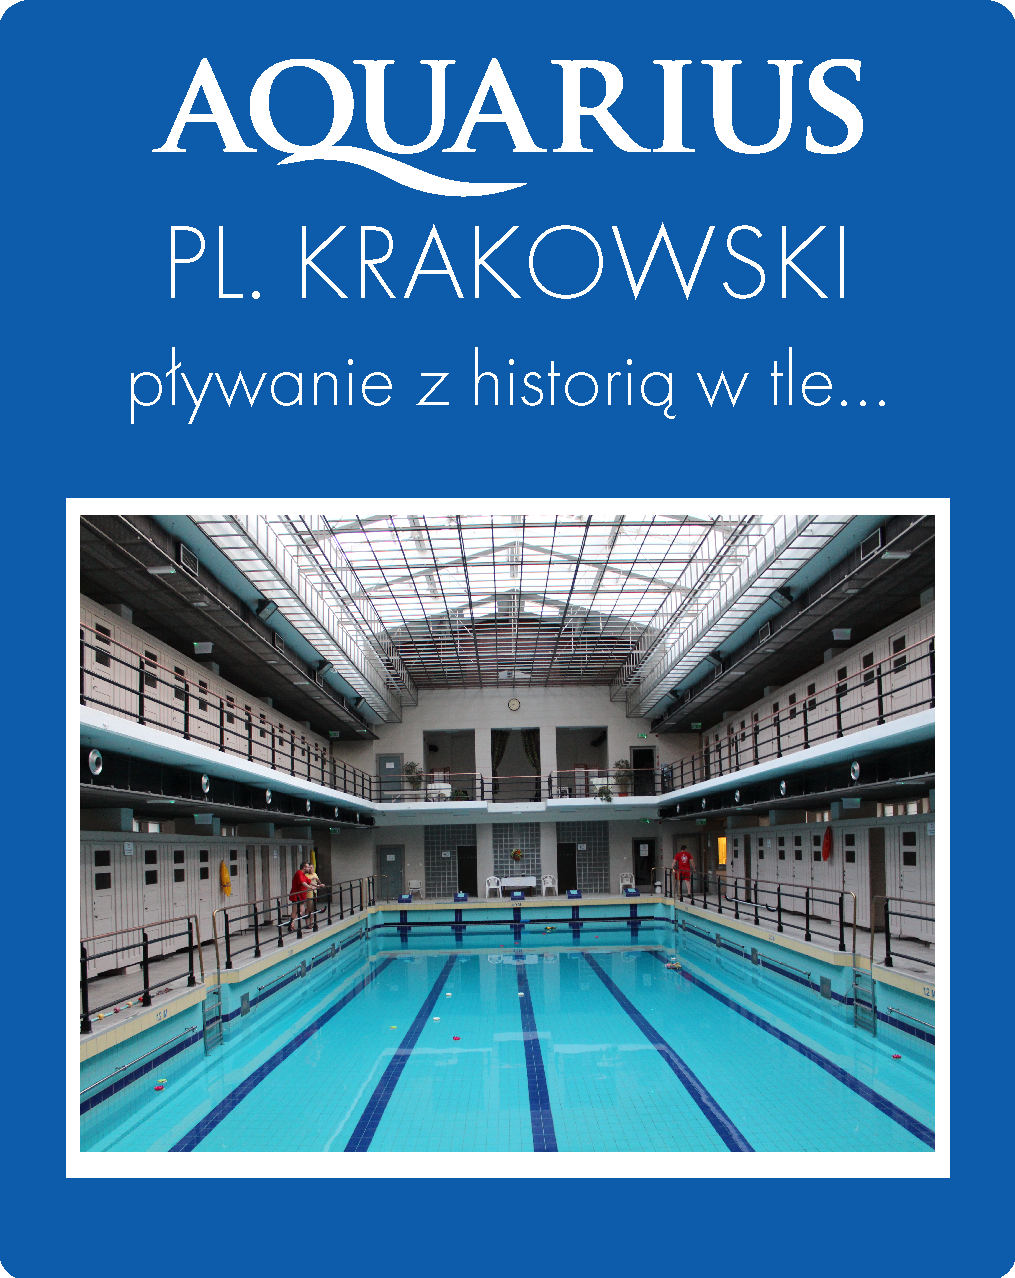 plac krakowski-02